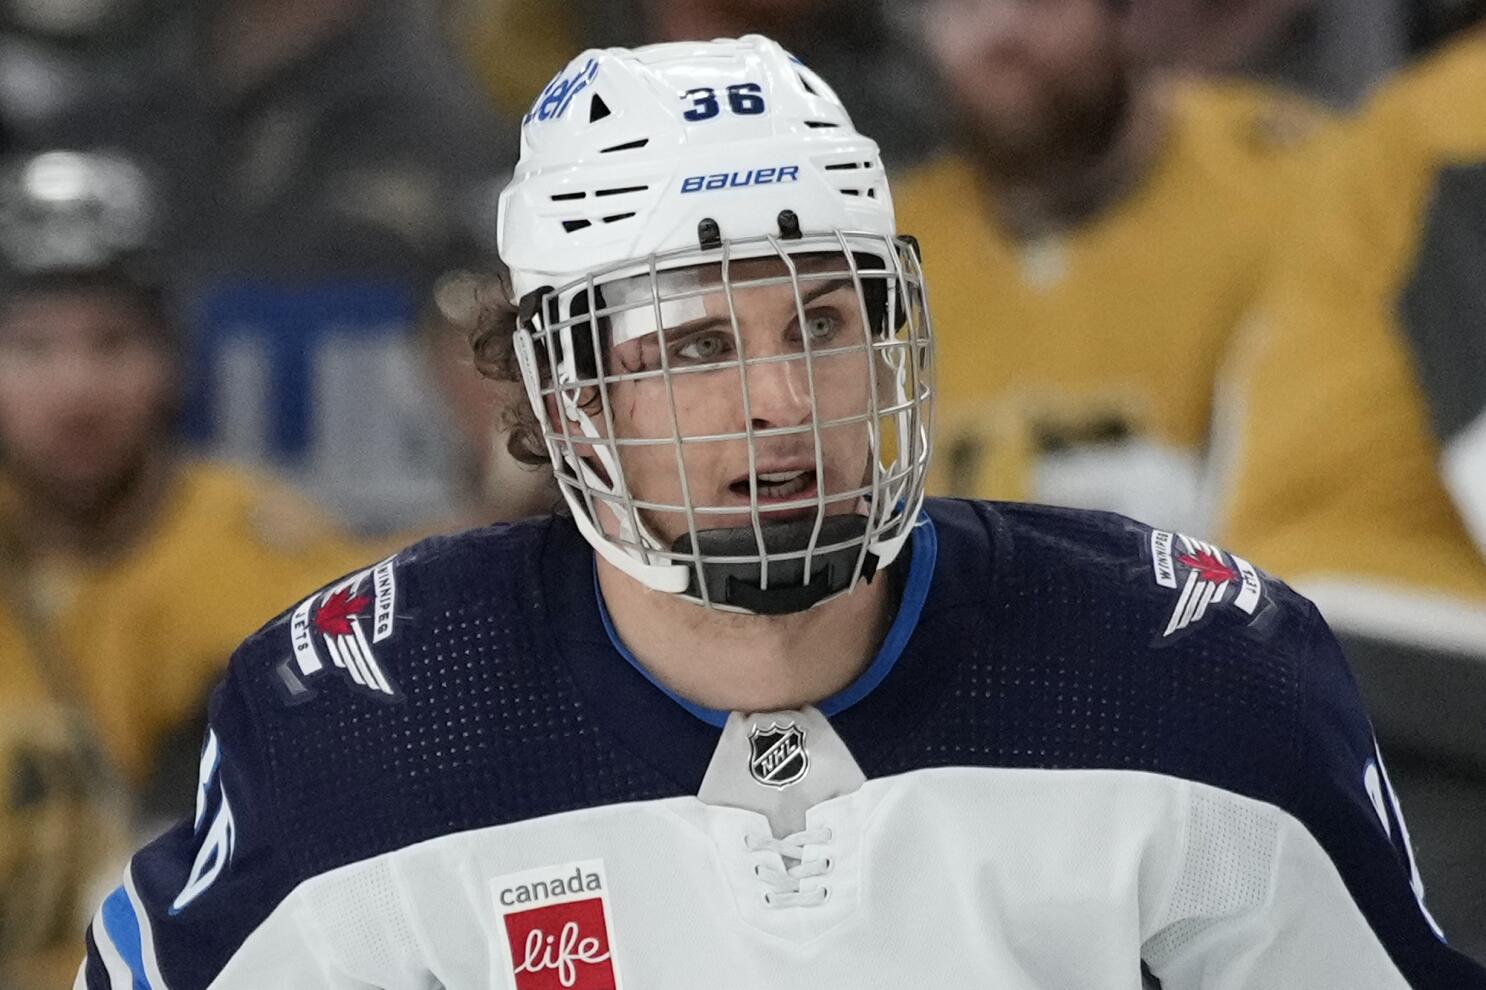 NHL Players Shrug Off Concerns After Barron's Skate To Face